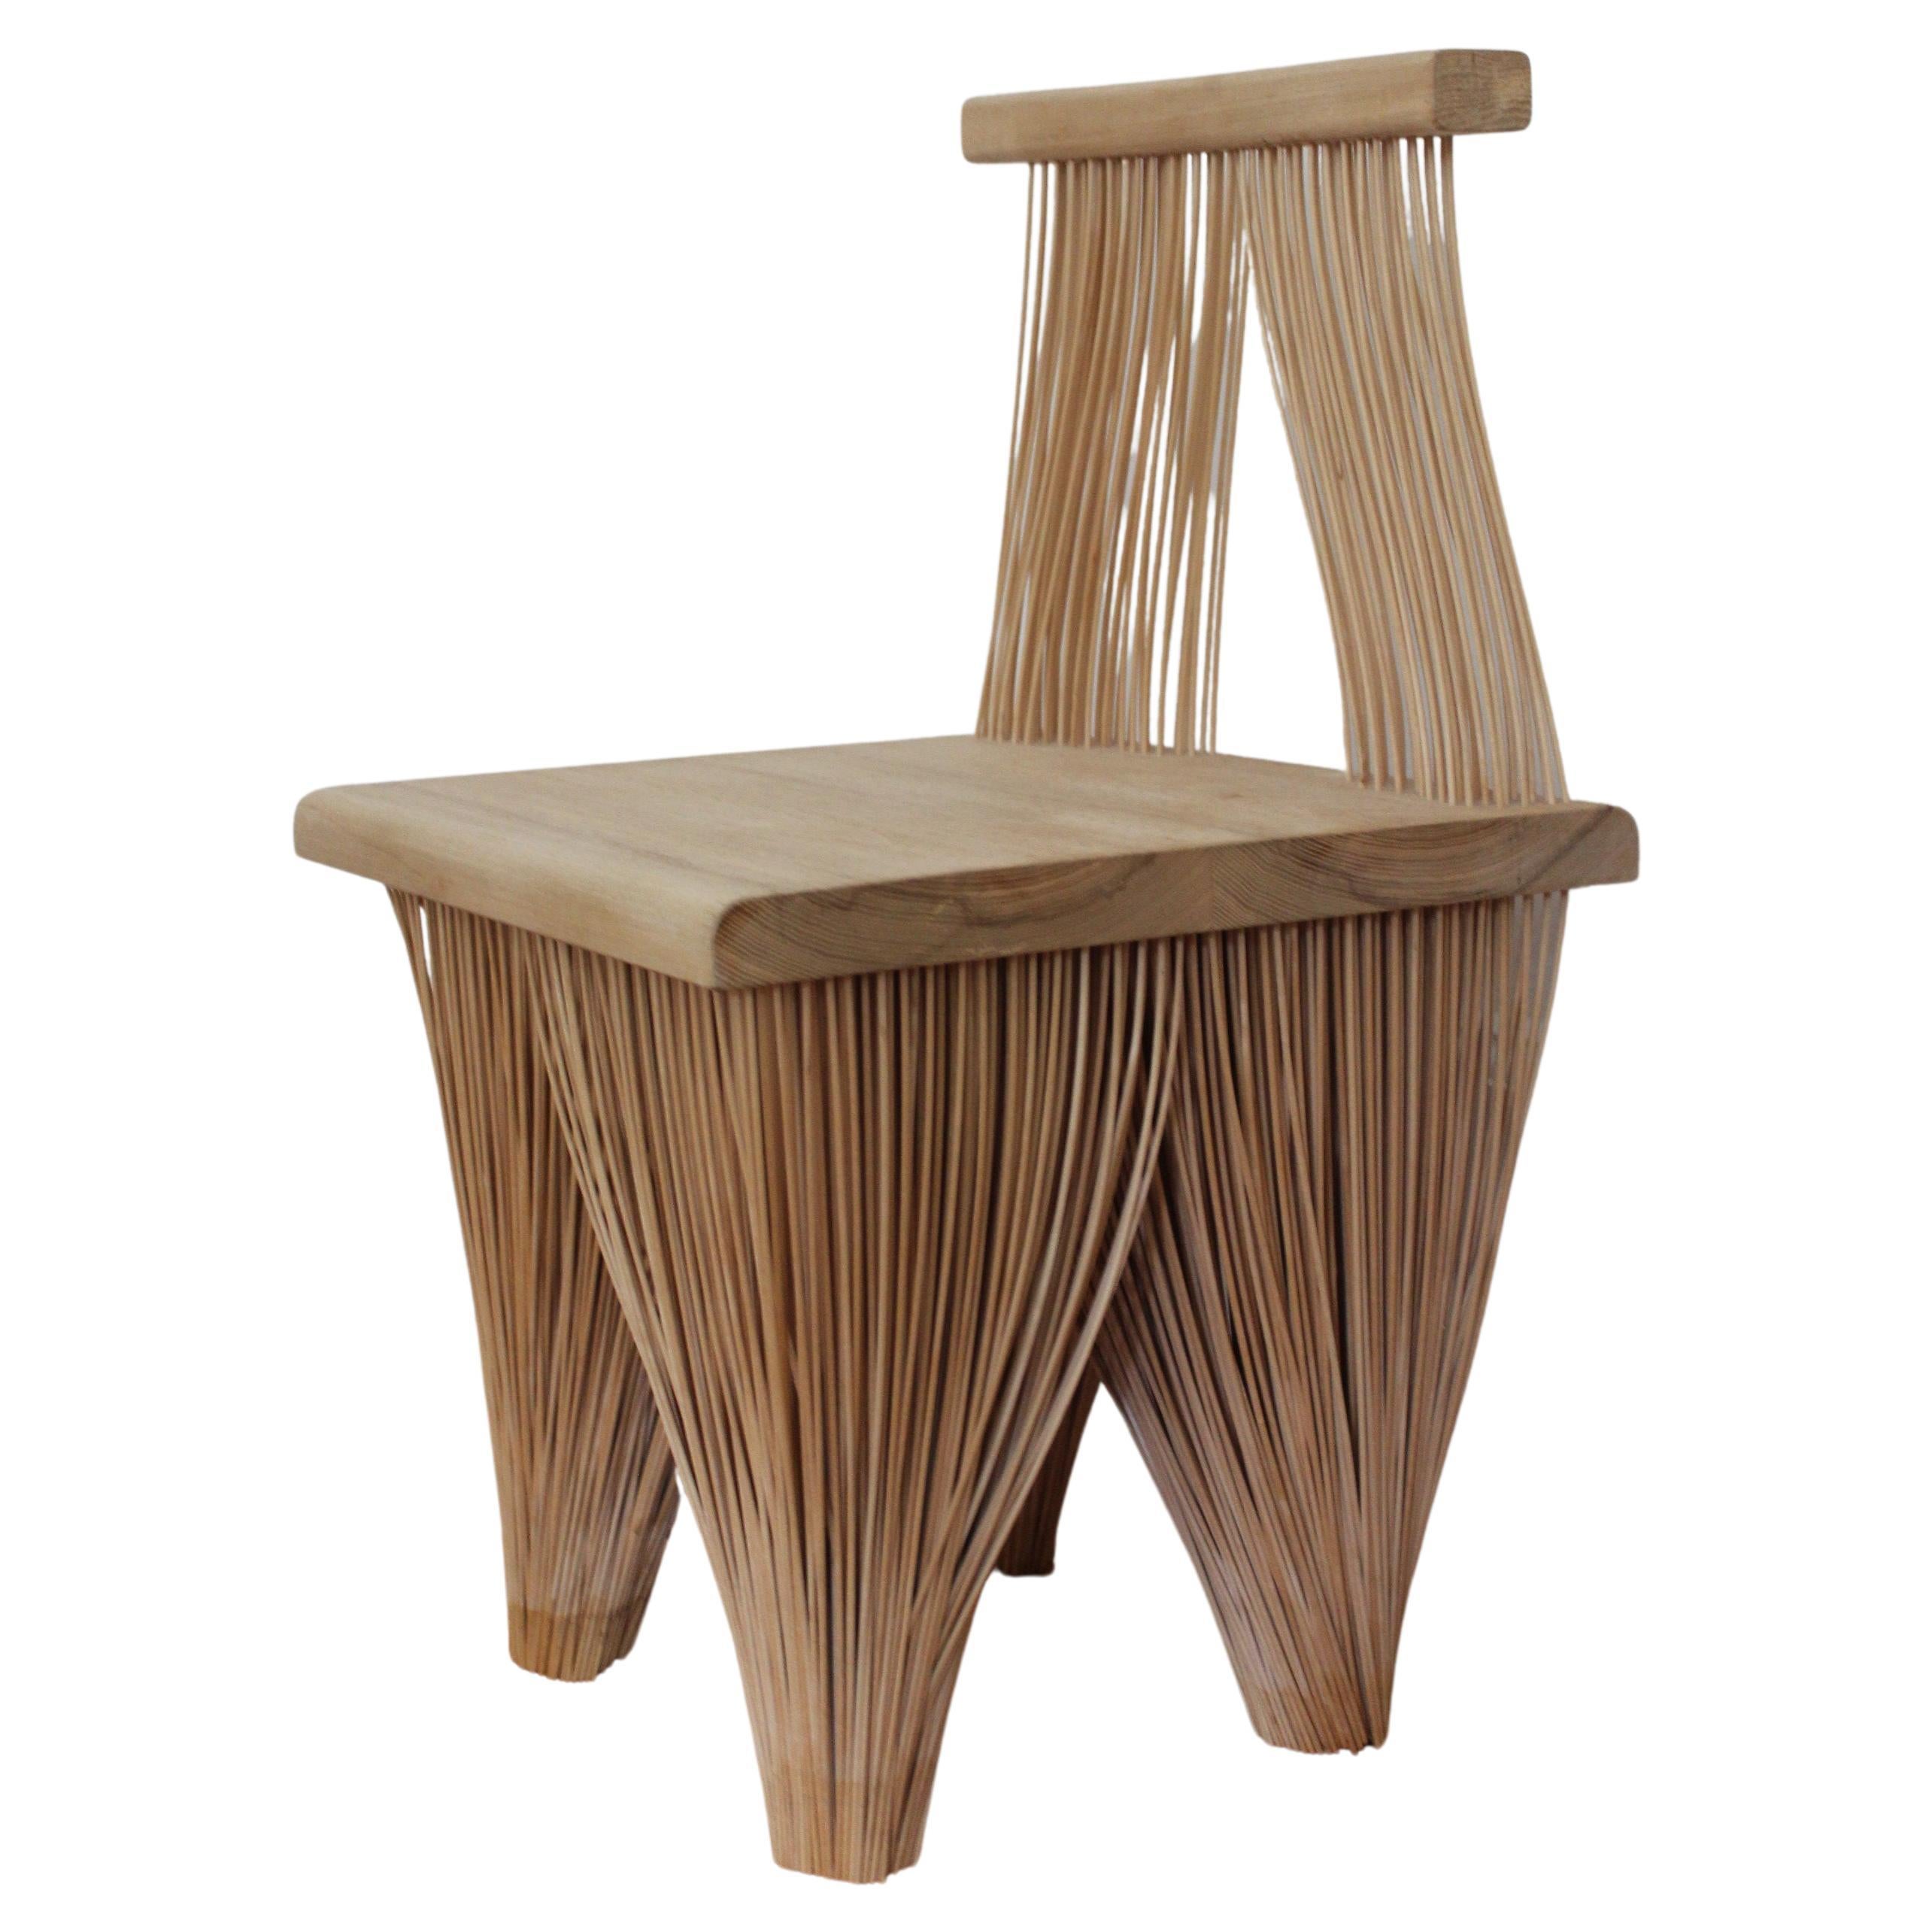 Contemporary Japanese Inspired Wood Wood Hallway Statement Sculptural Chair (chaise sculpturale contemporaine pour couloir) 